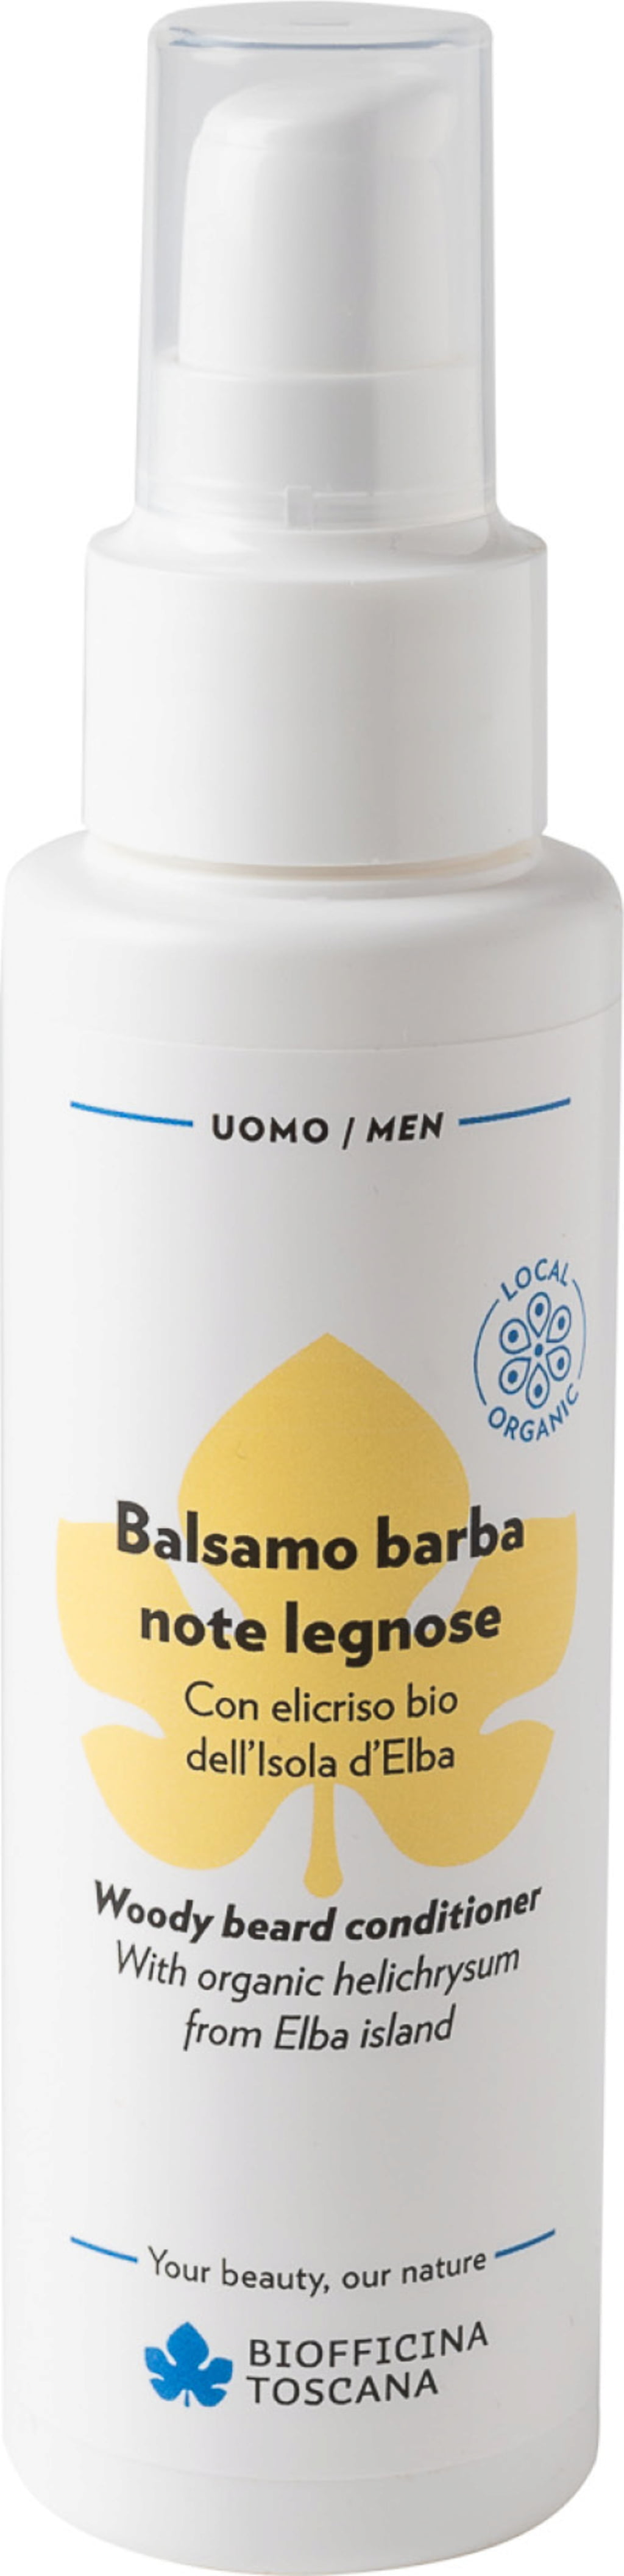 Biofficina Toscana uomo Balsamo Barba - Note legnose